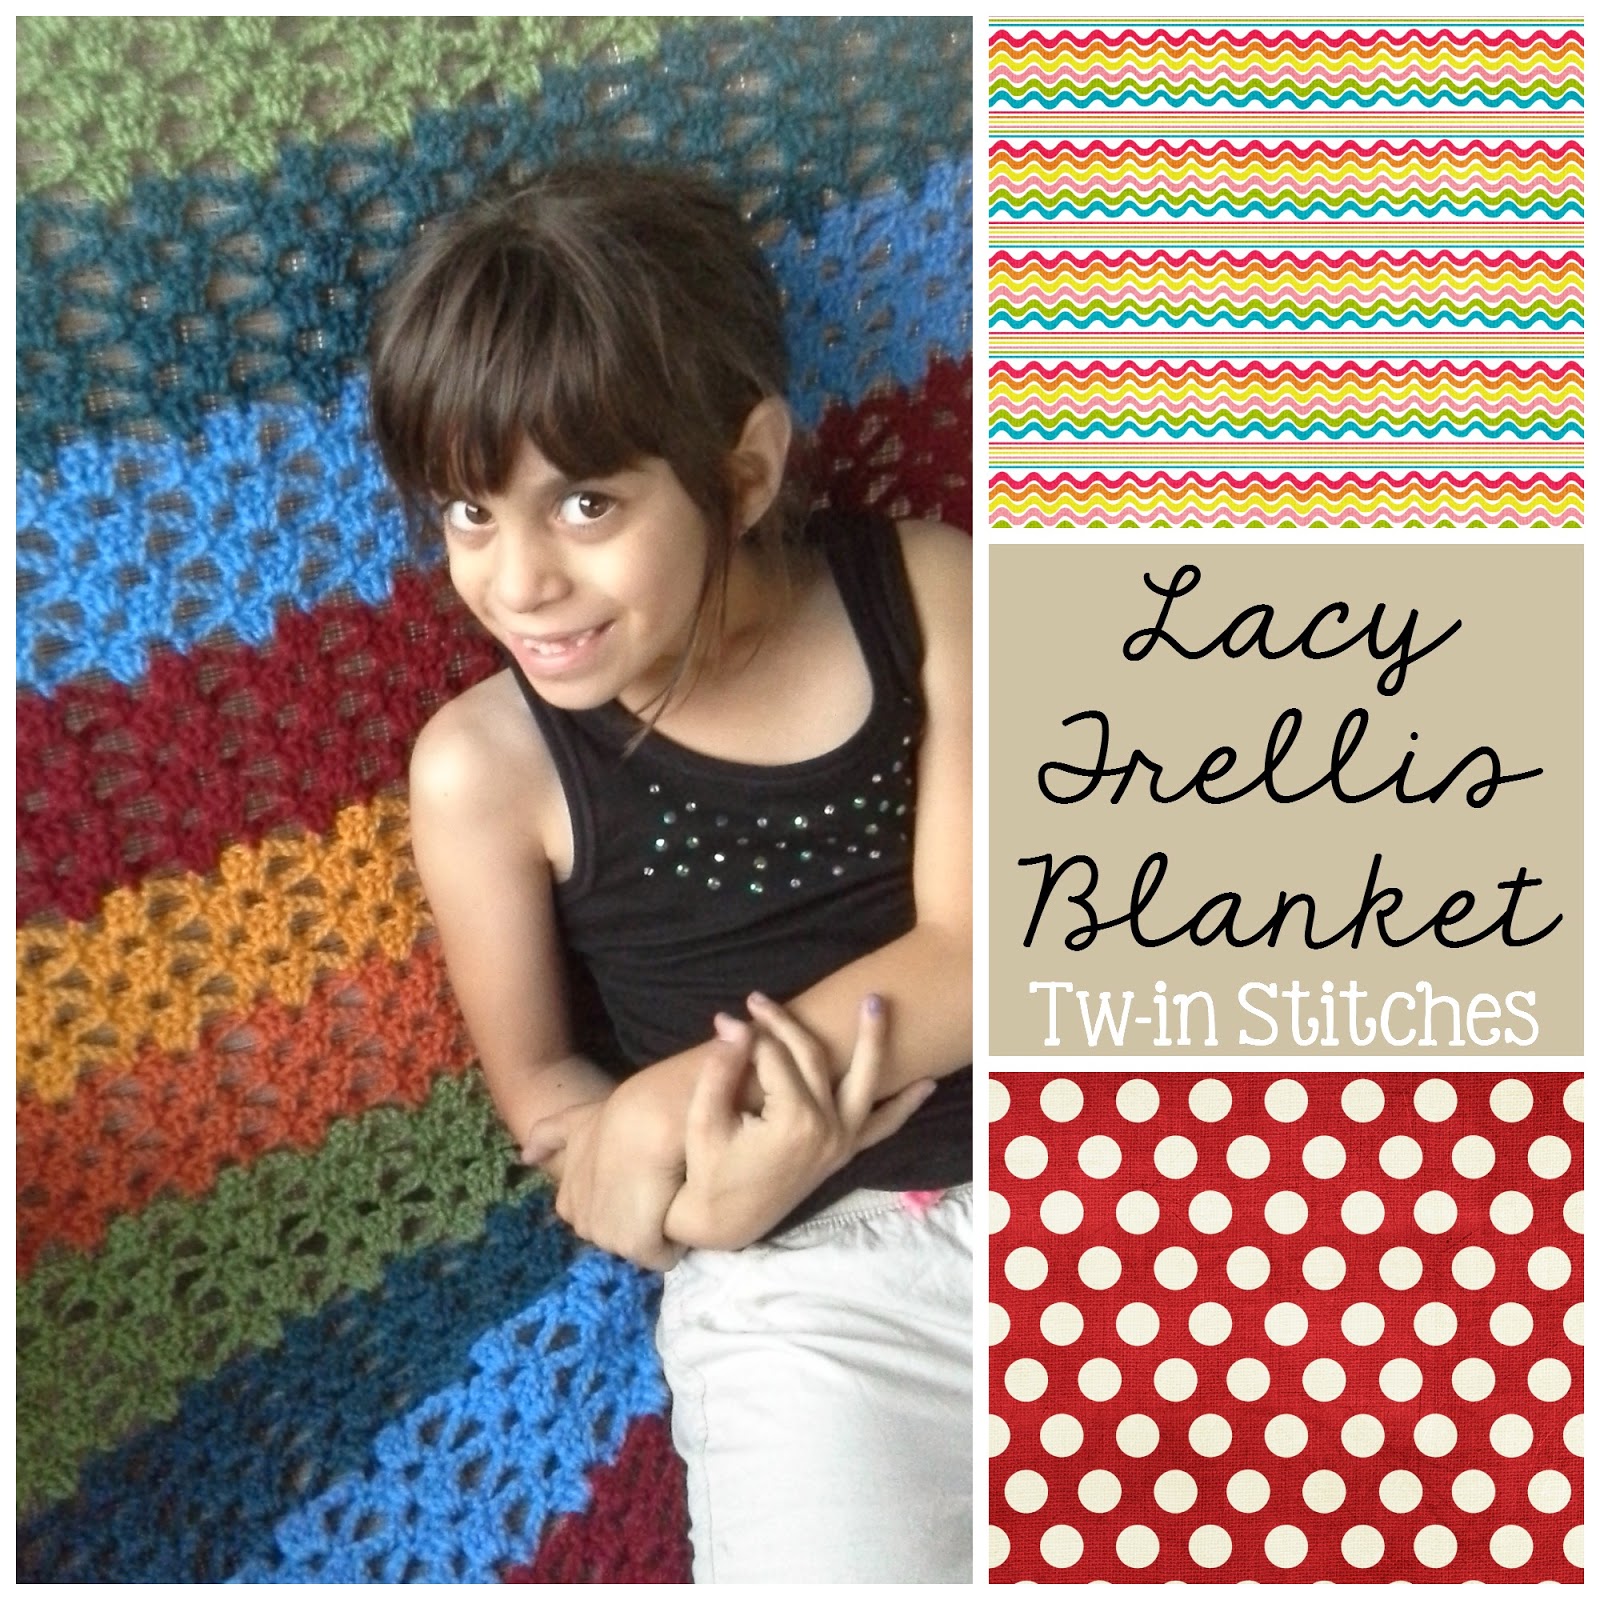 http://twinstitches.blogspot.com/2014/05/lacy-trellis-blanket-free-pattern.html